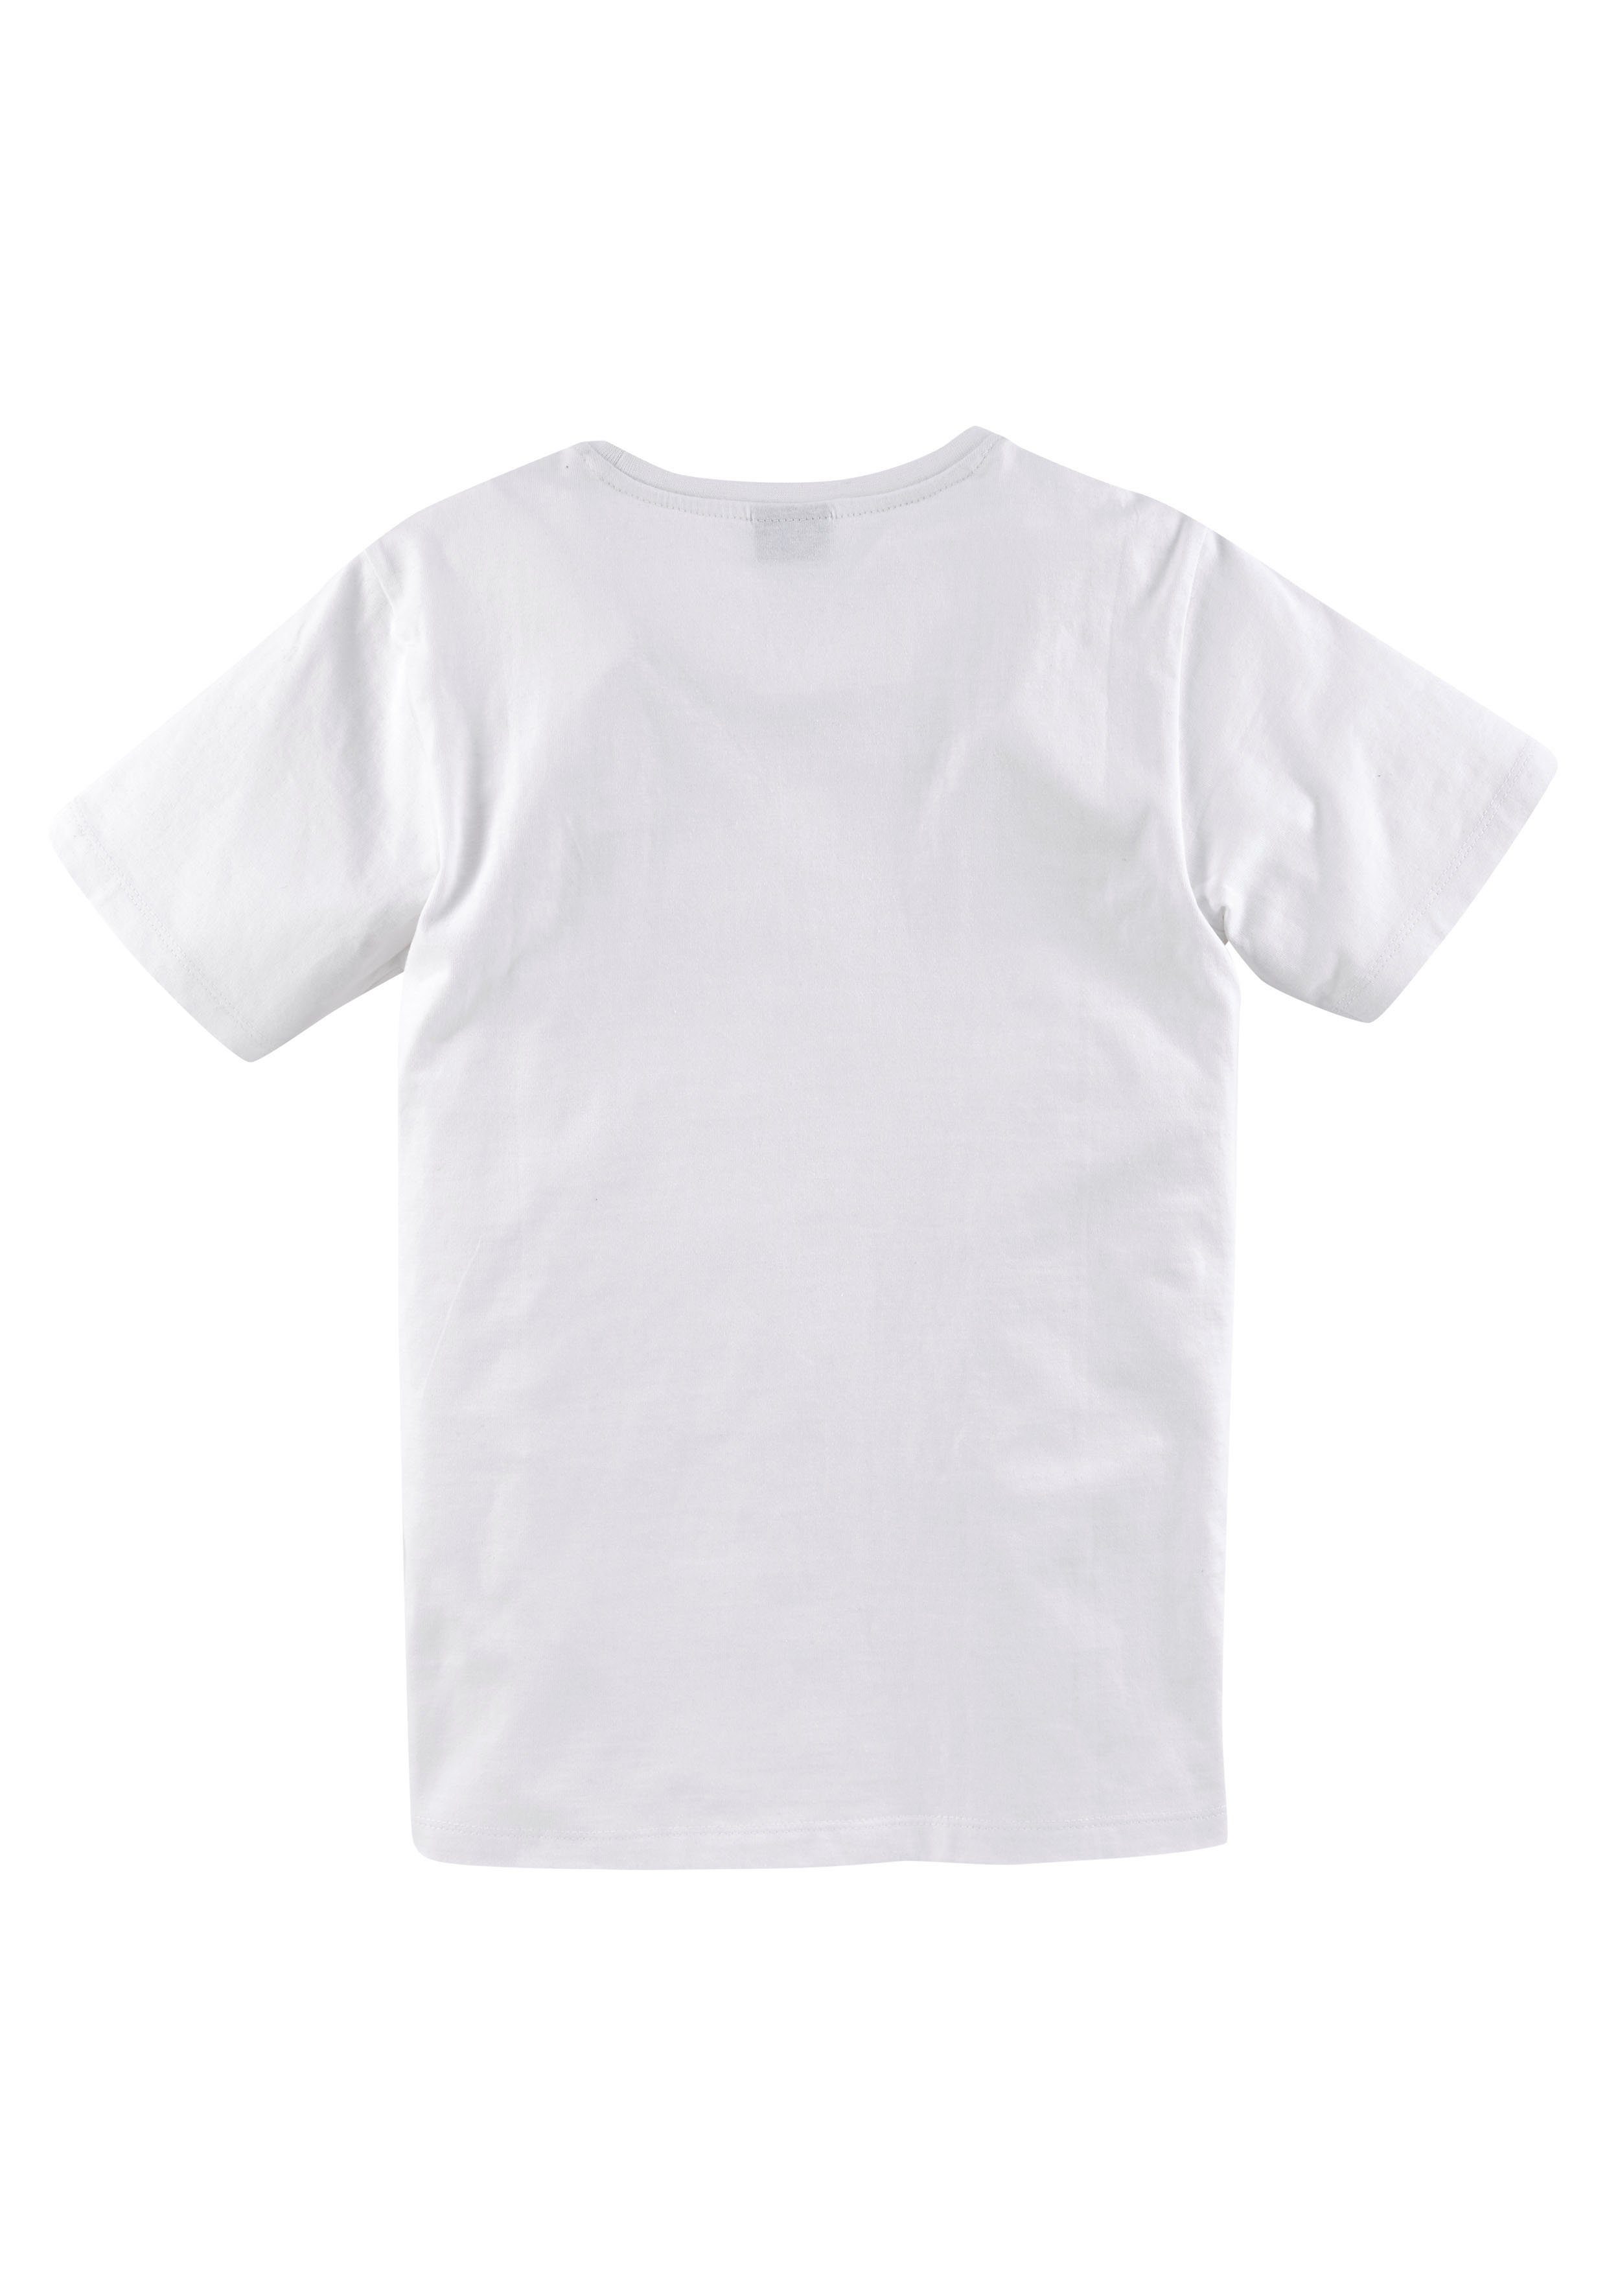 KIDSWORLD T-Shirt GAMING ZONE, Spruch